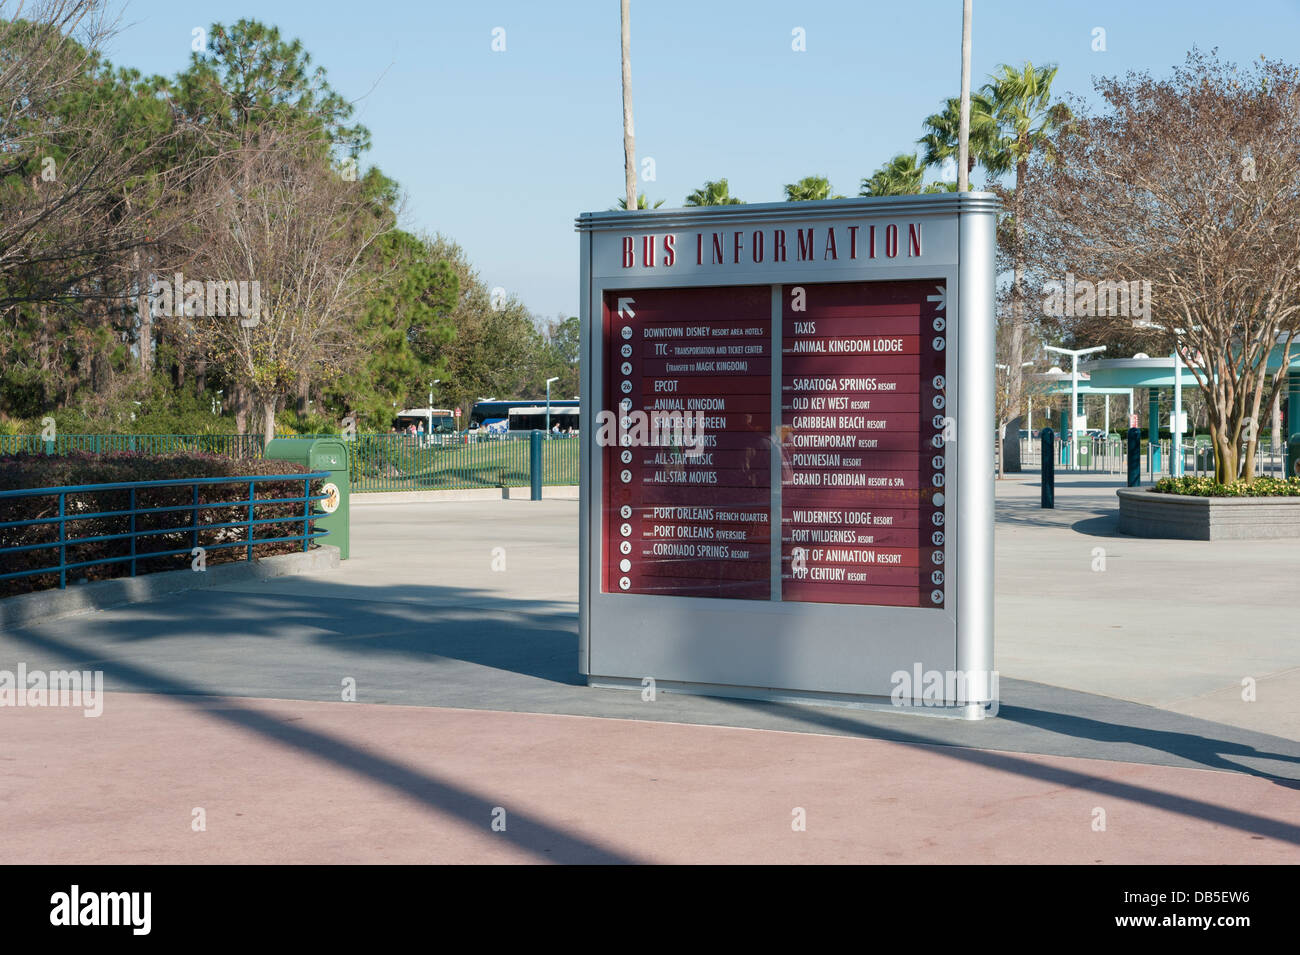 Transportation Information board at Disney's Hollywood Studios, Orlando Florida. Stock Photo